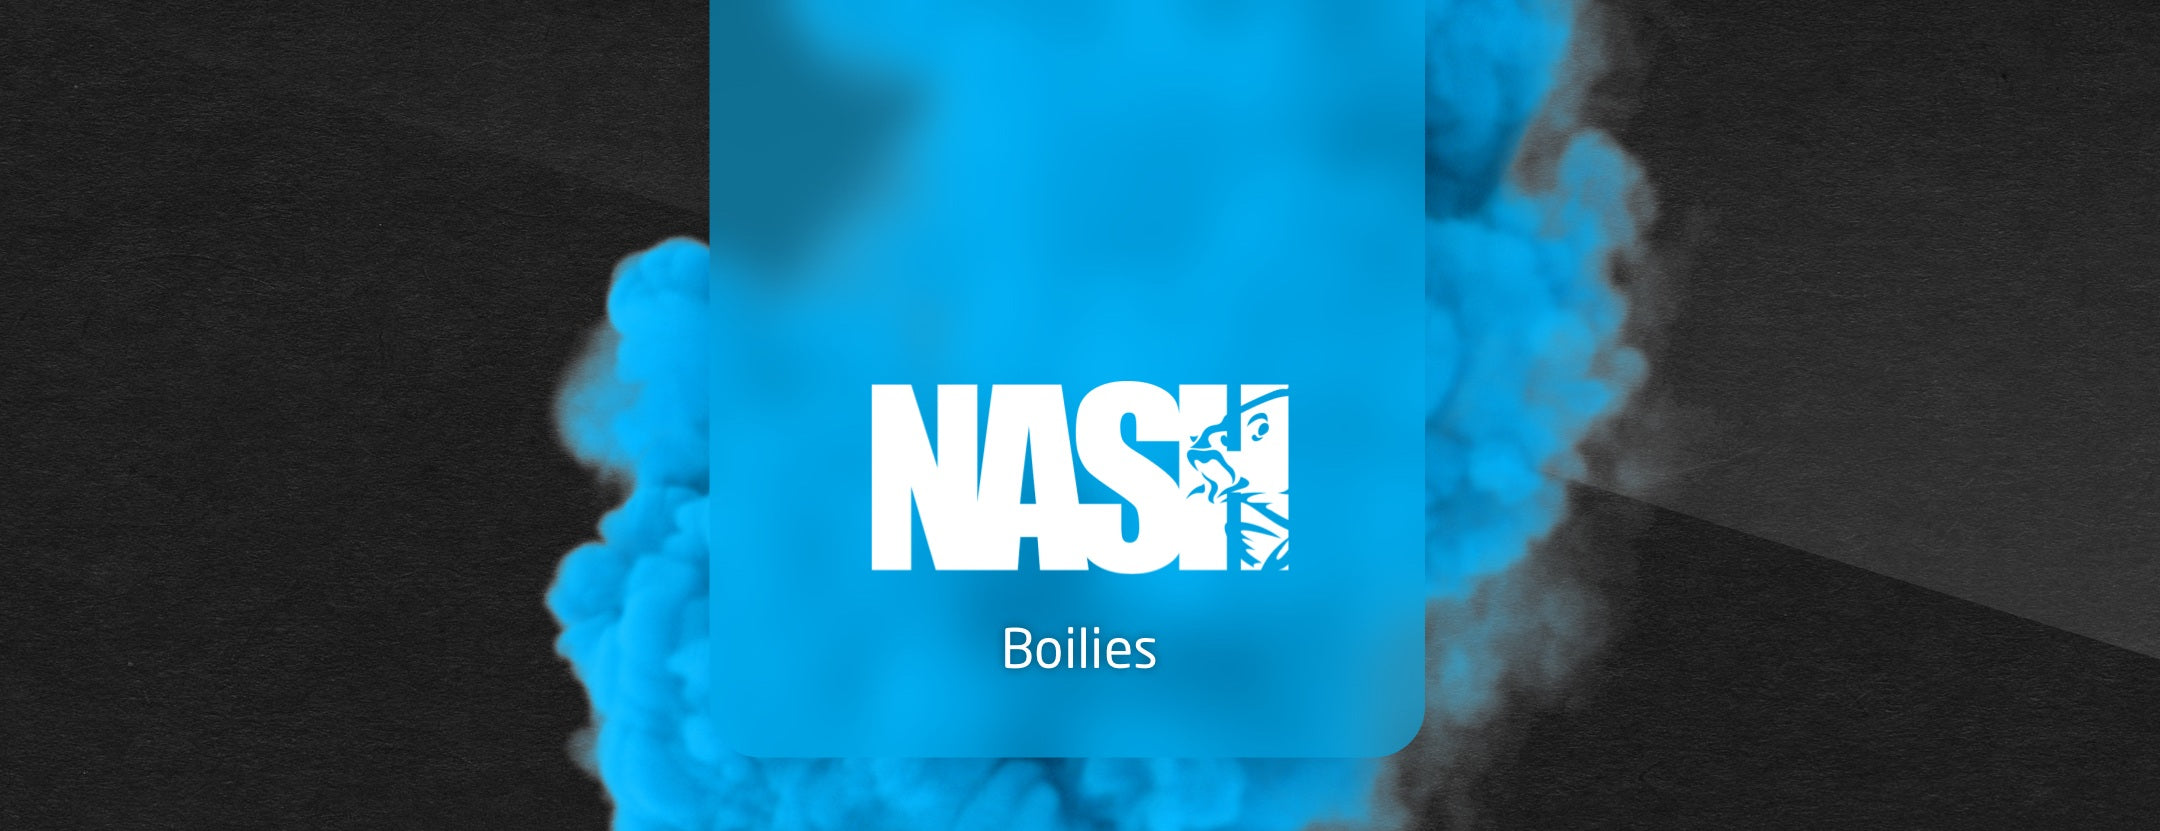 Nash Boilies